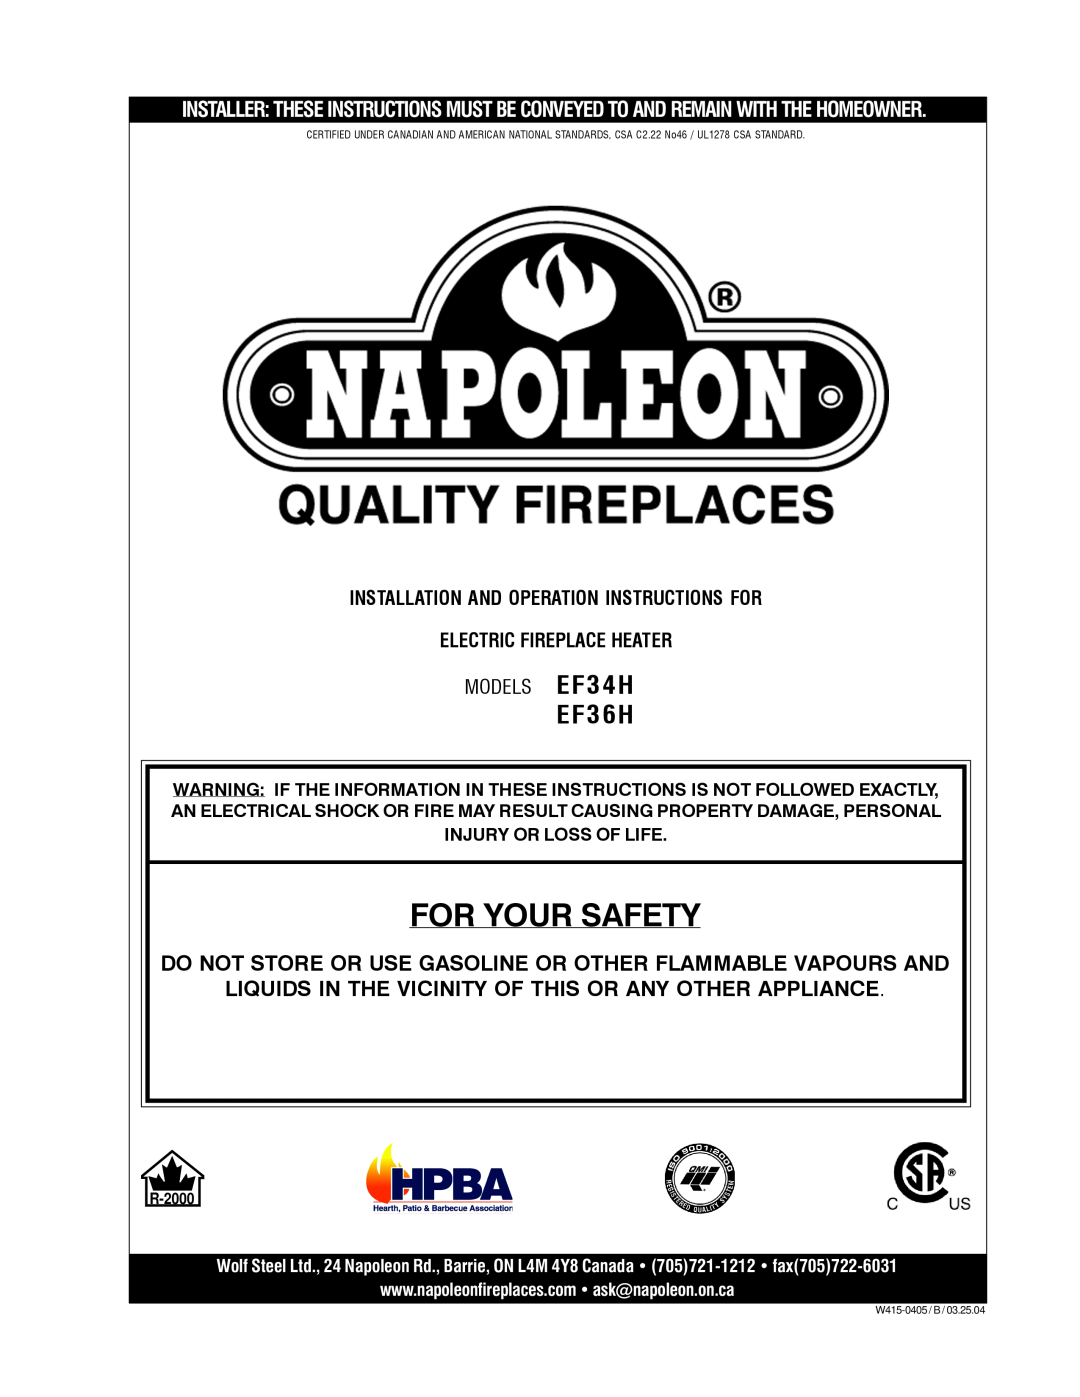 Napoleon Fireplaces EF36H manual W415-0544 /10.31.05 